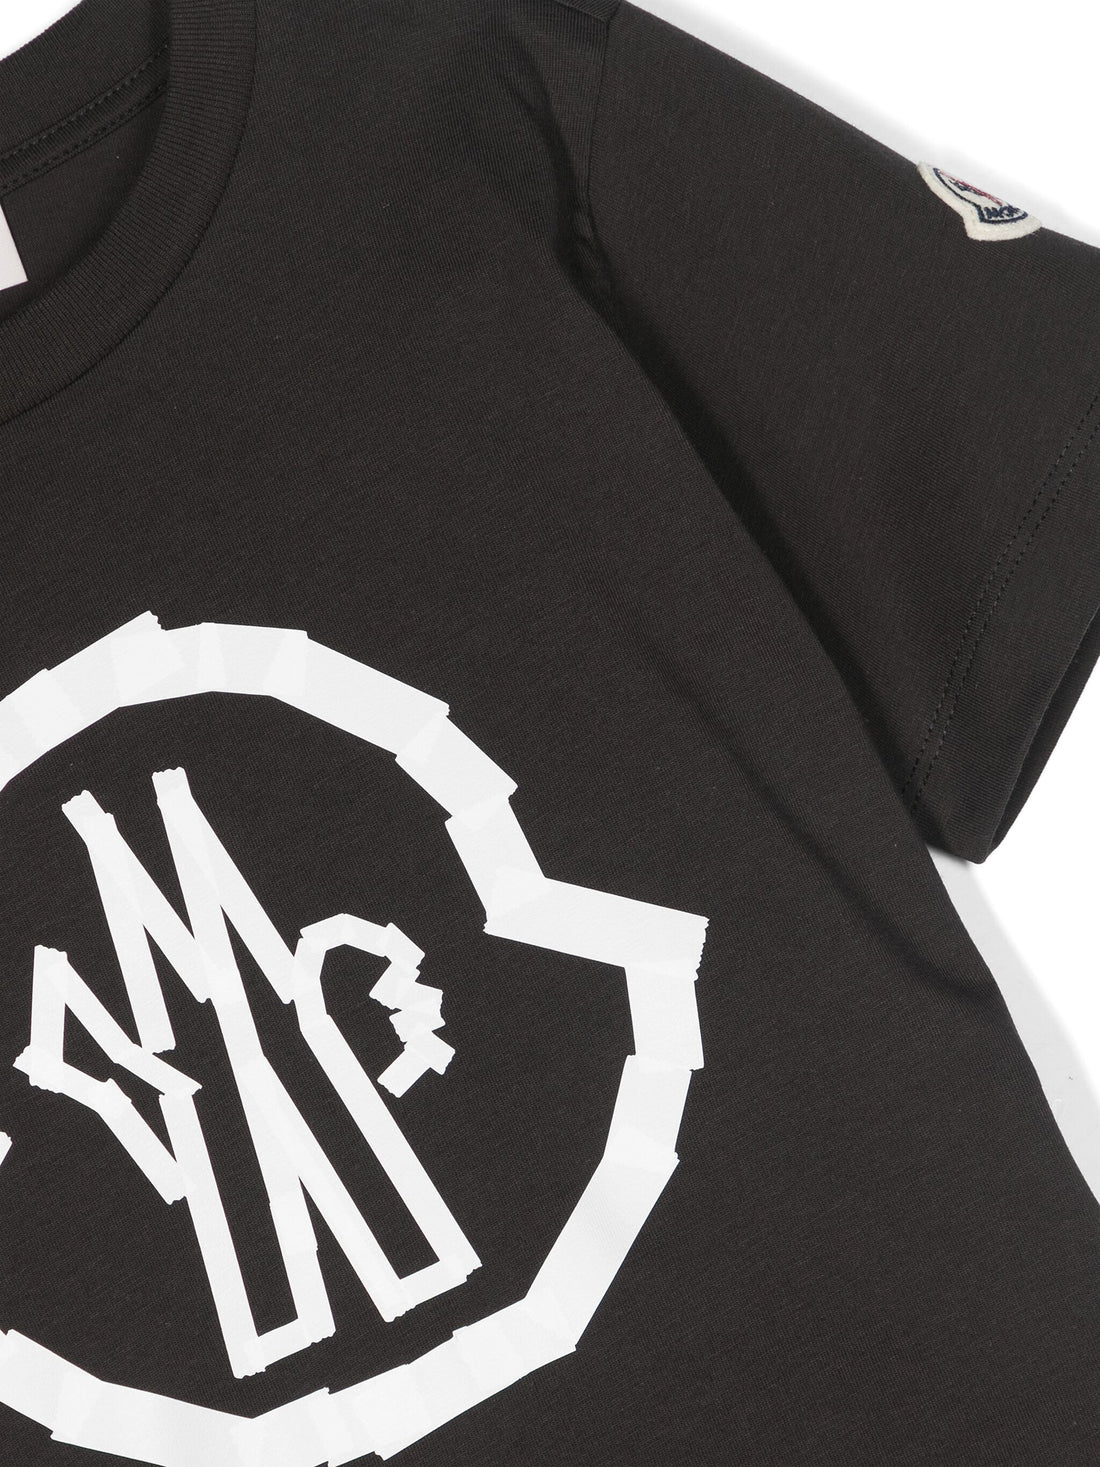 MONCLER KIDS Boys Logo Printed Cotton T-Shirt Black - MAISONDEFASHION.COM